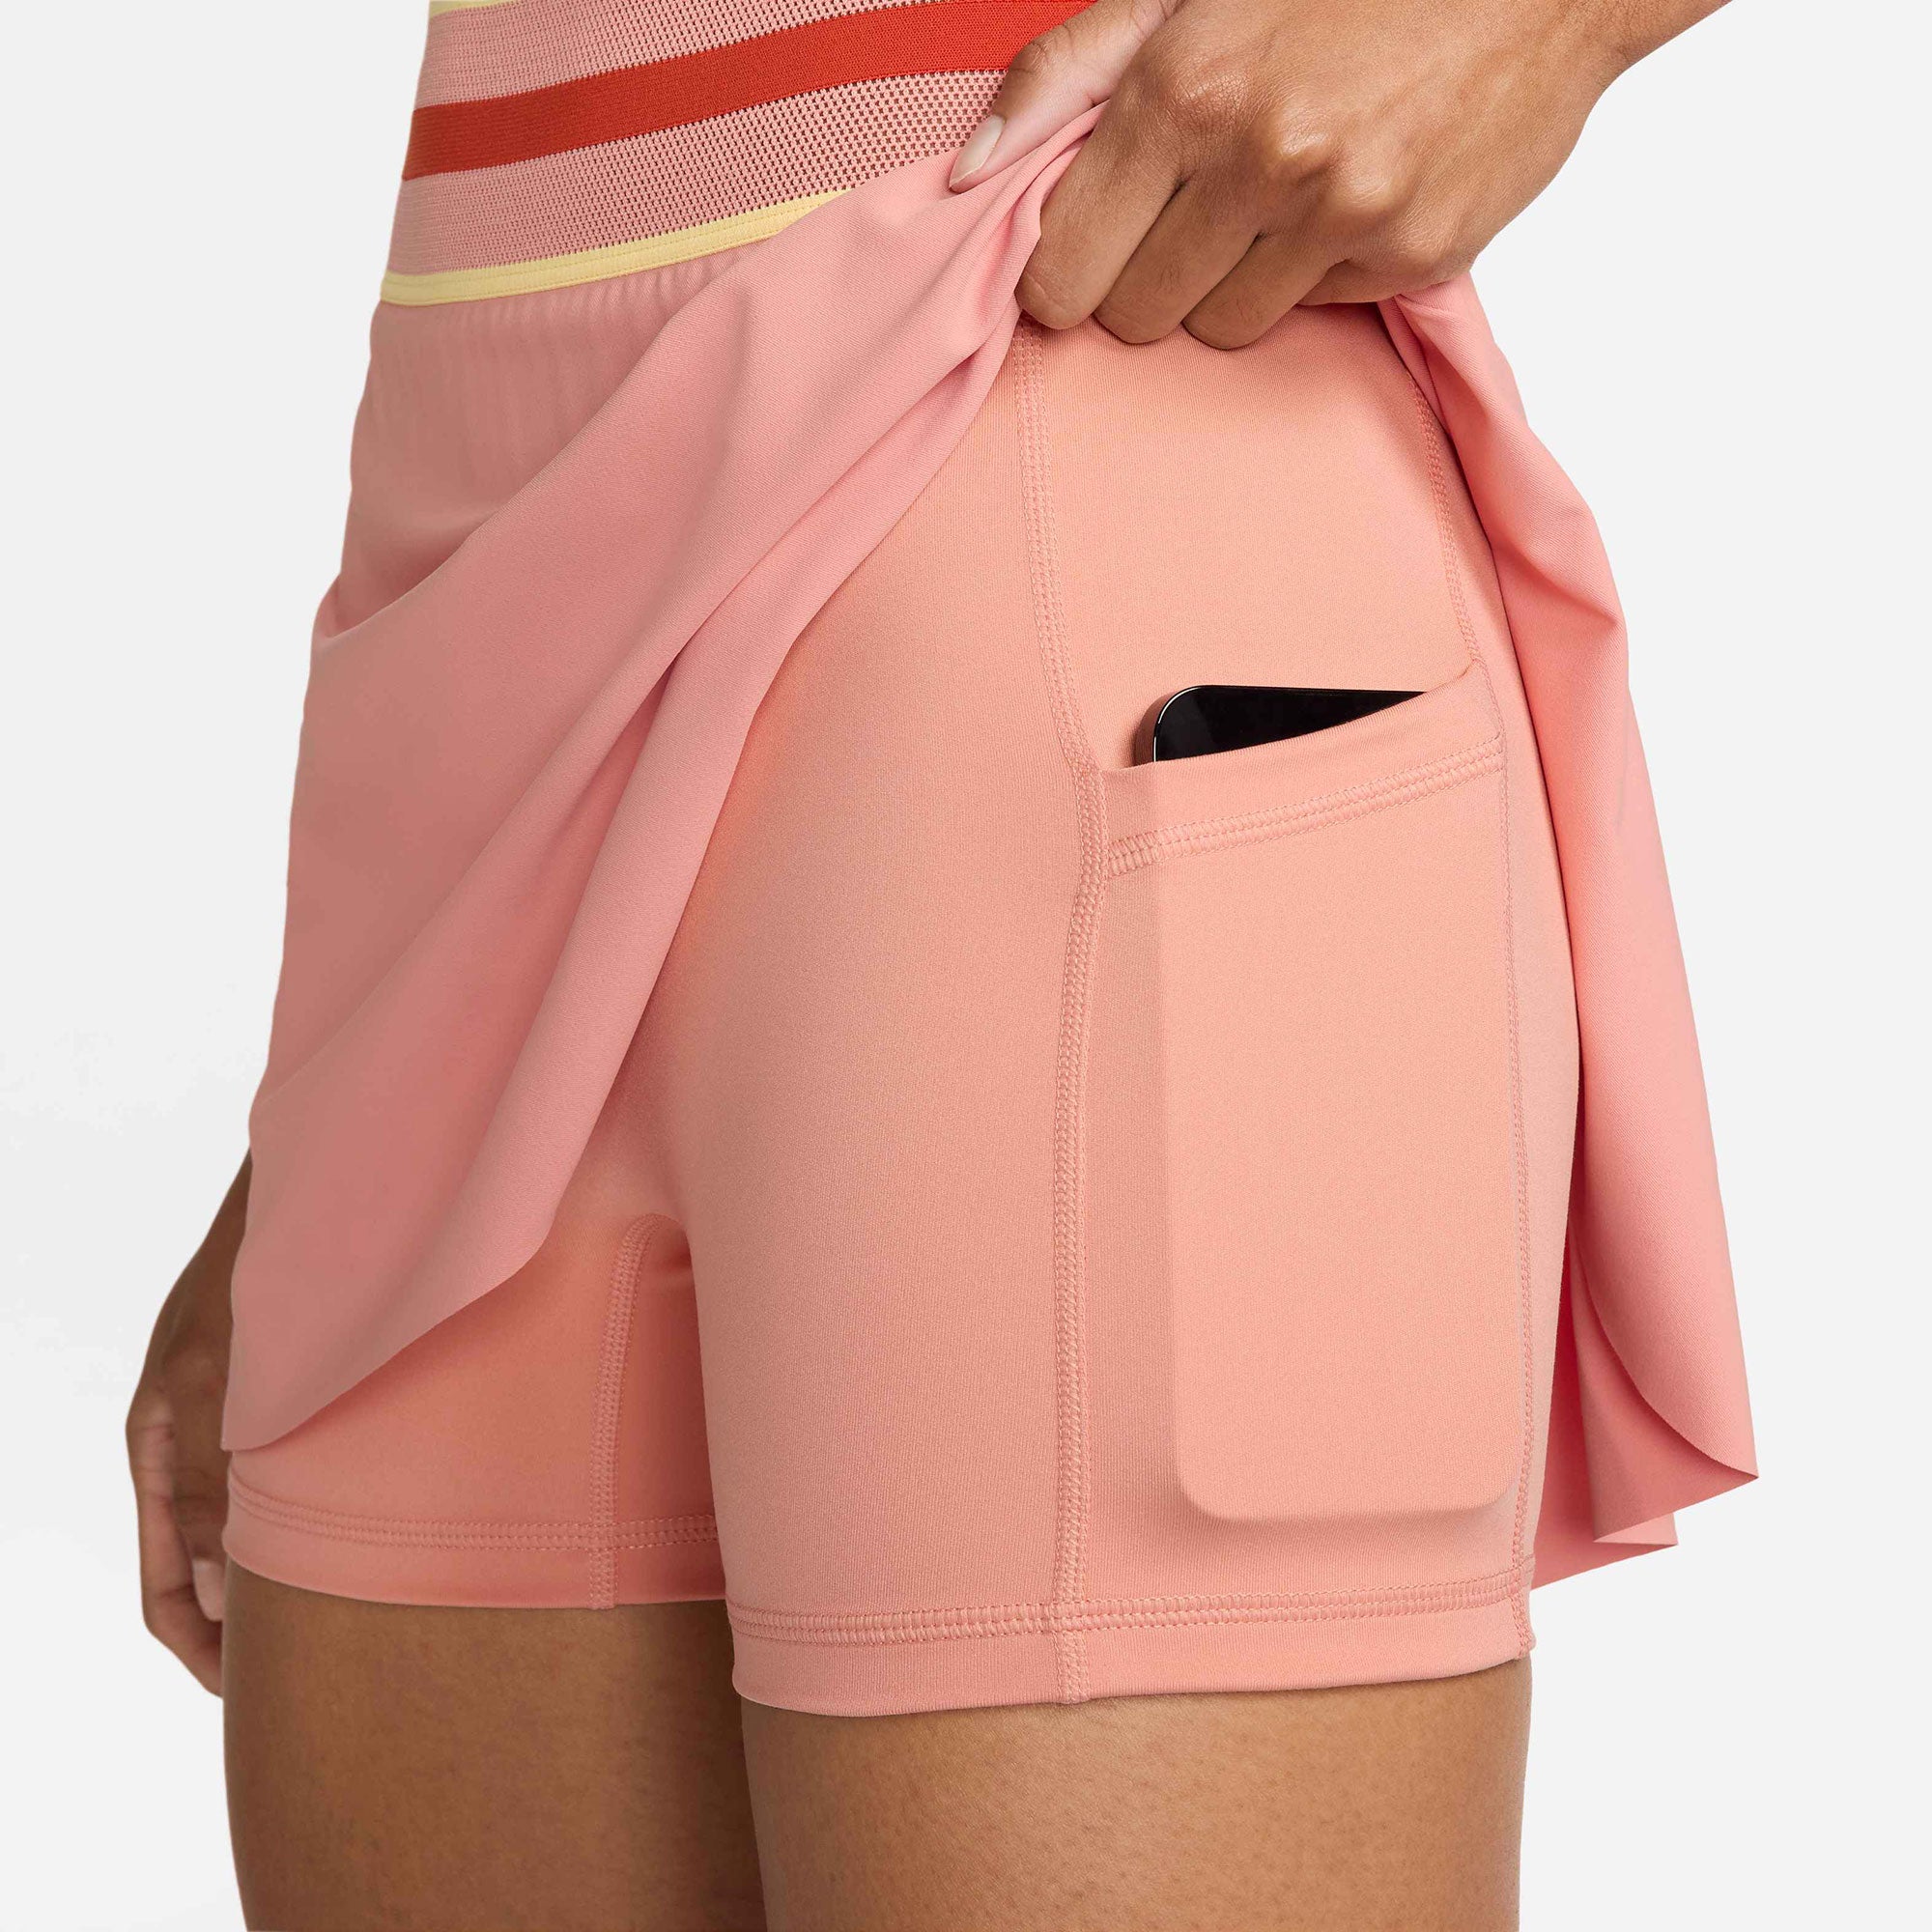 NikeCourt Slam Paris Women's Dri-FIT Tennis Skirt - Pink (7)